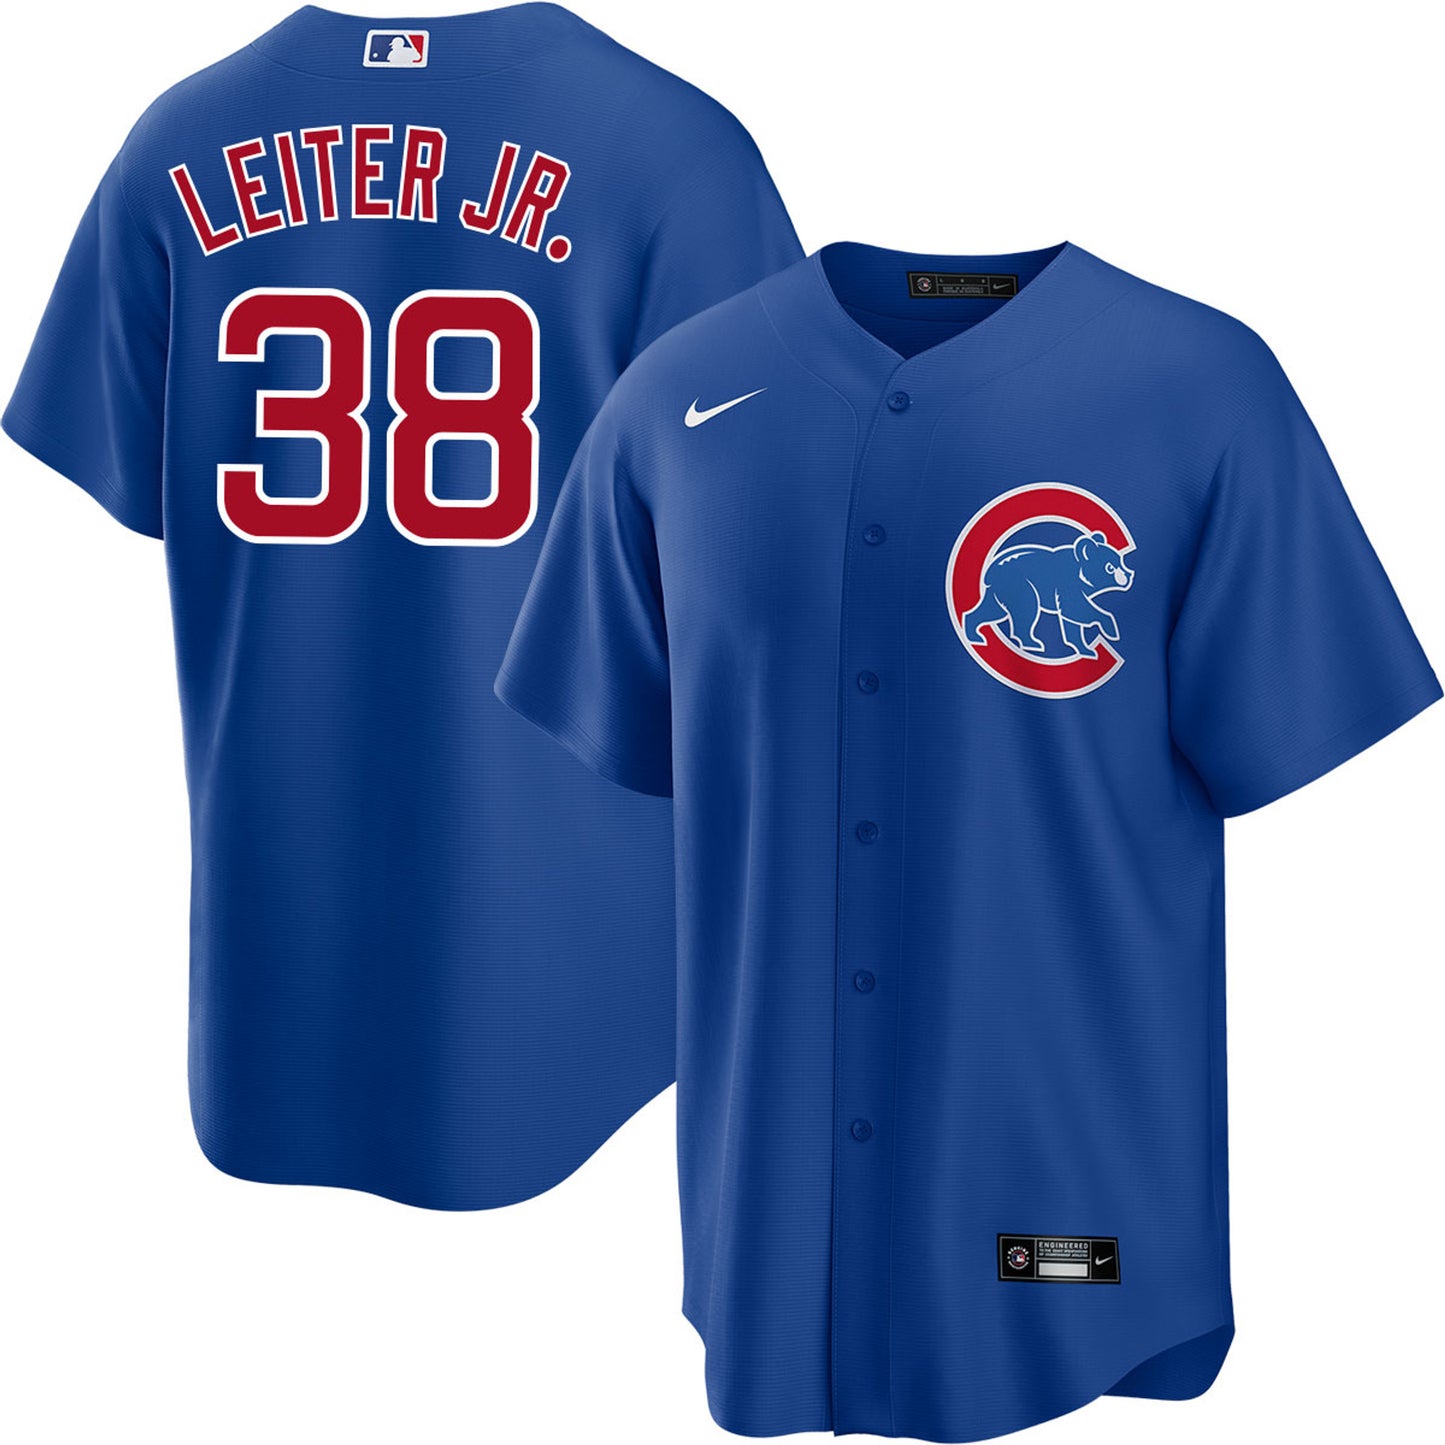 Men's  Chicago Cubs Mark Leiter Player Jersey